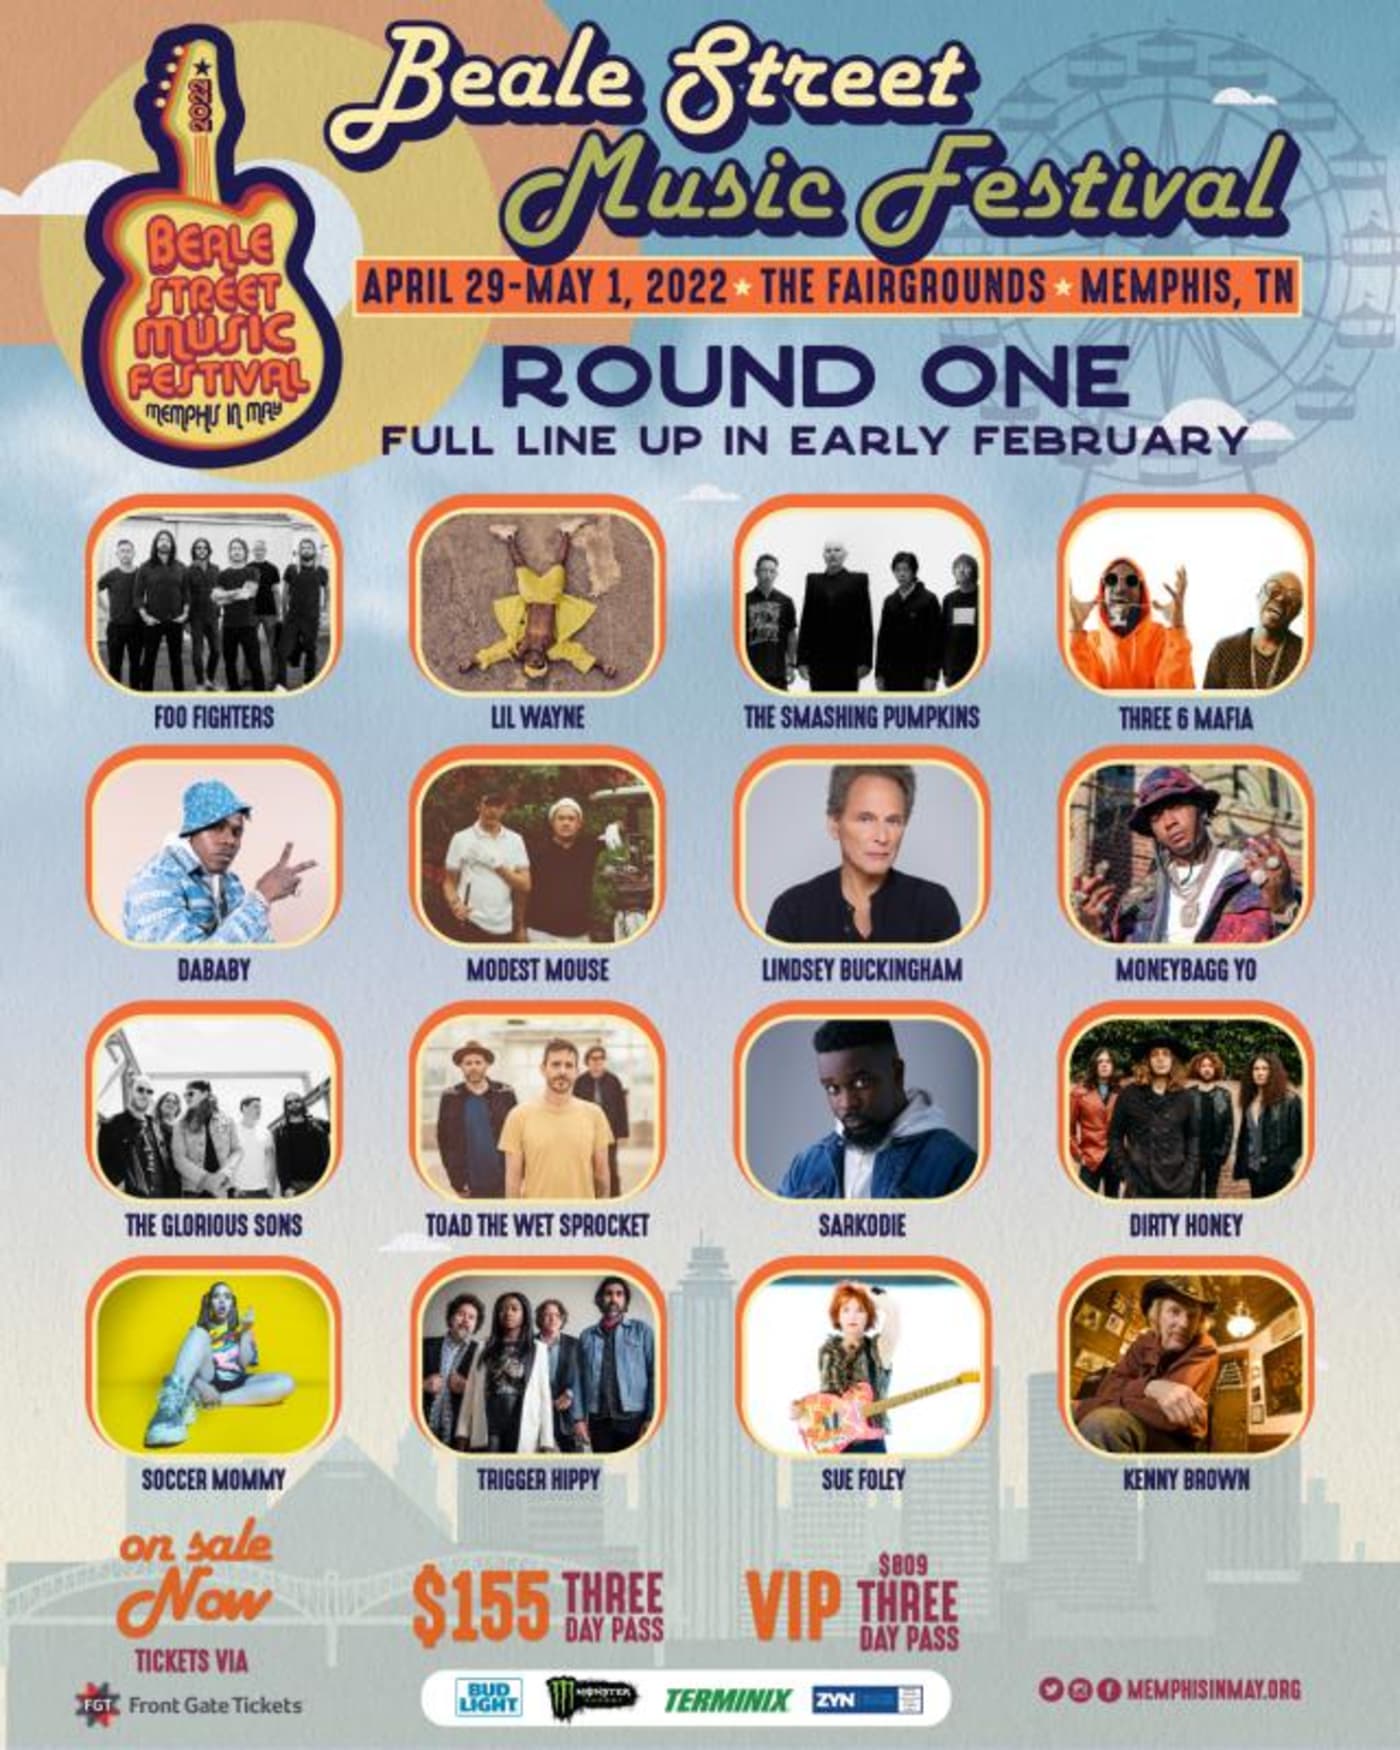 A flyer for a Memphis festival is shown